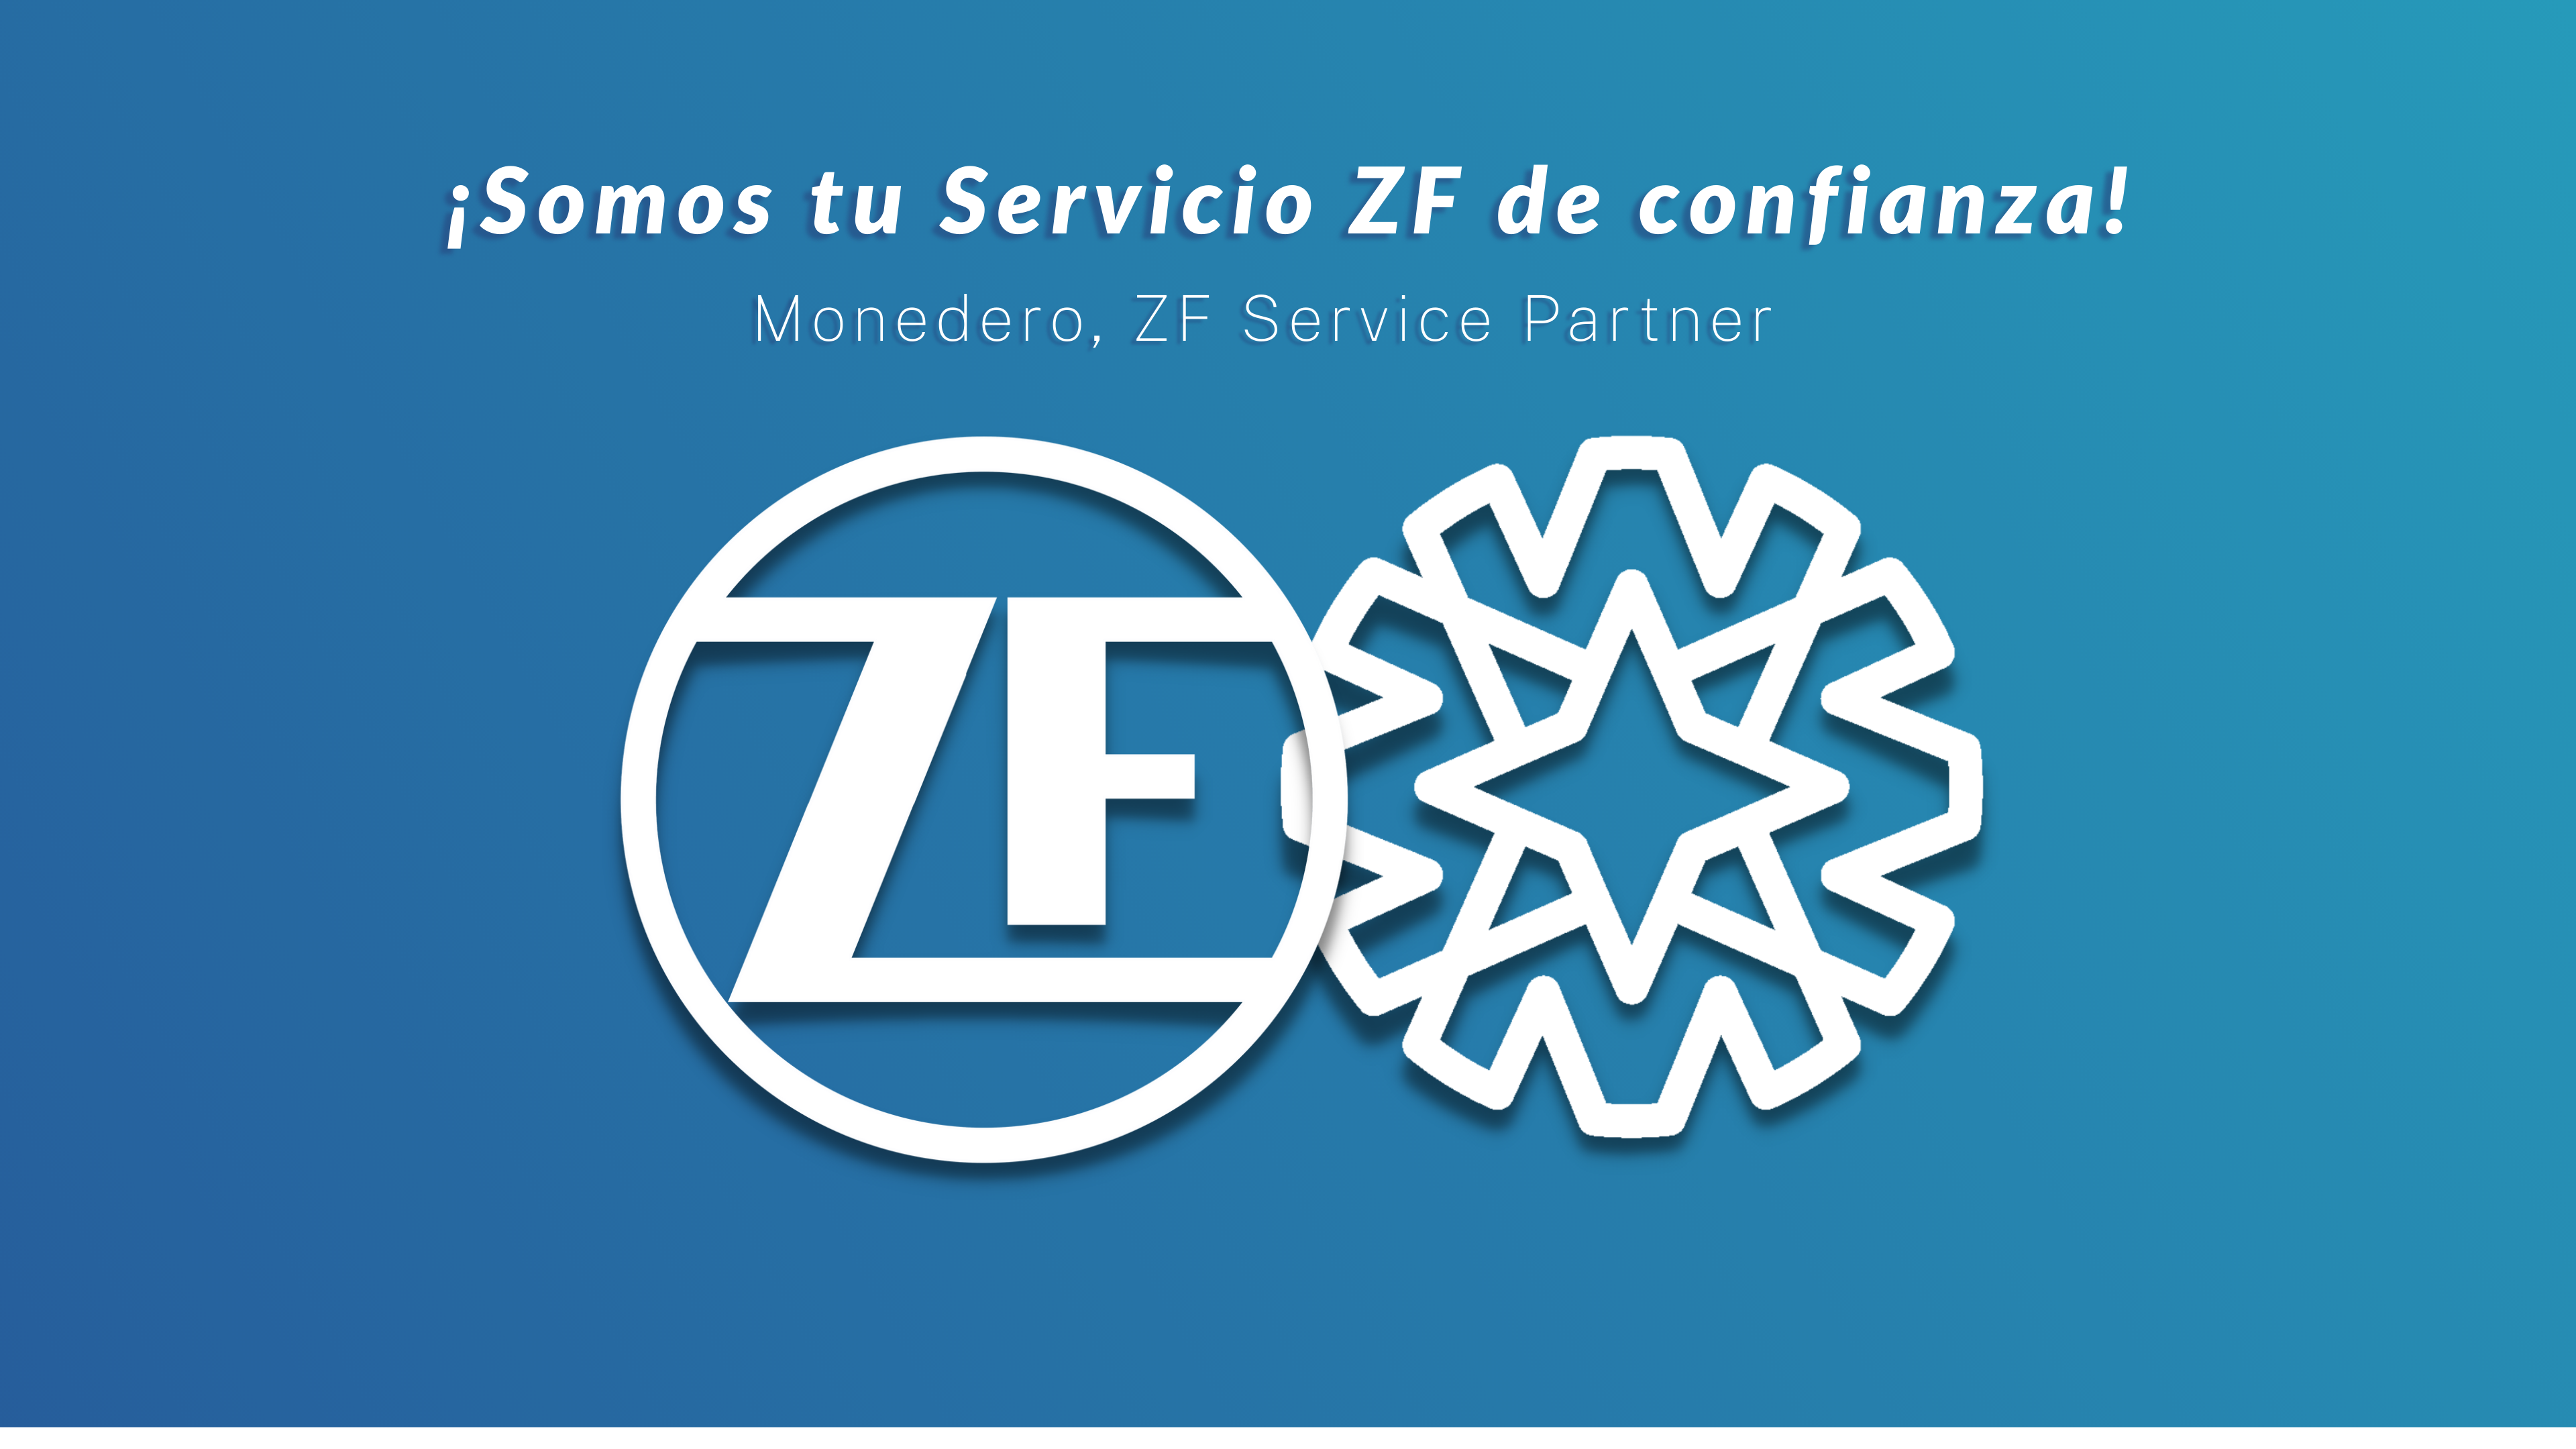 Monedero, ZF Service Partner